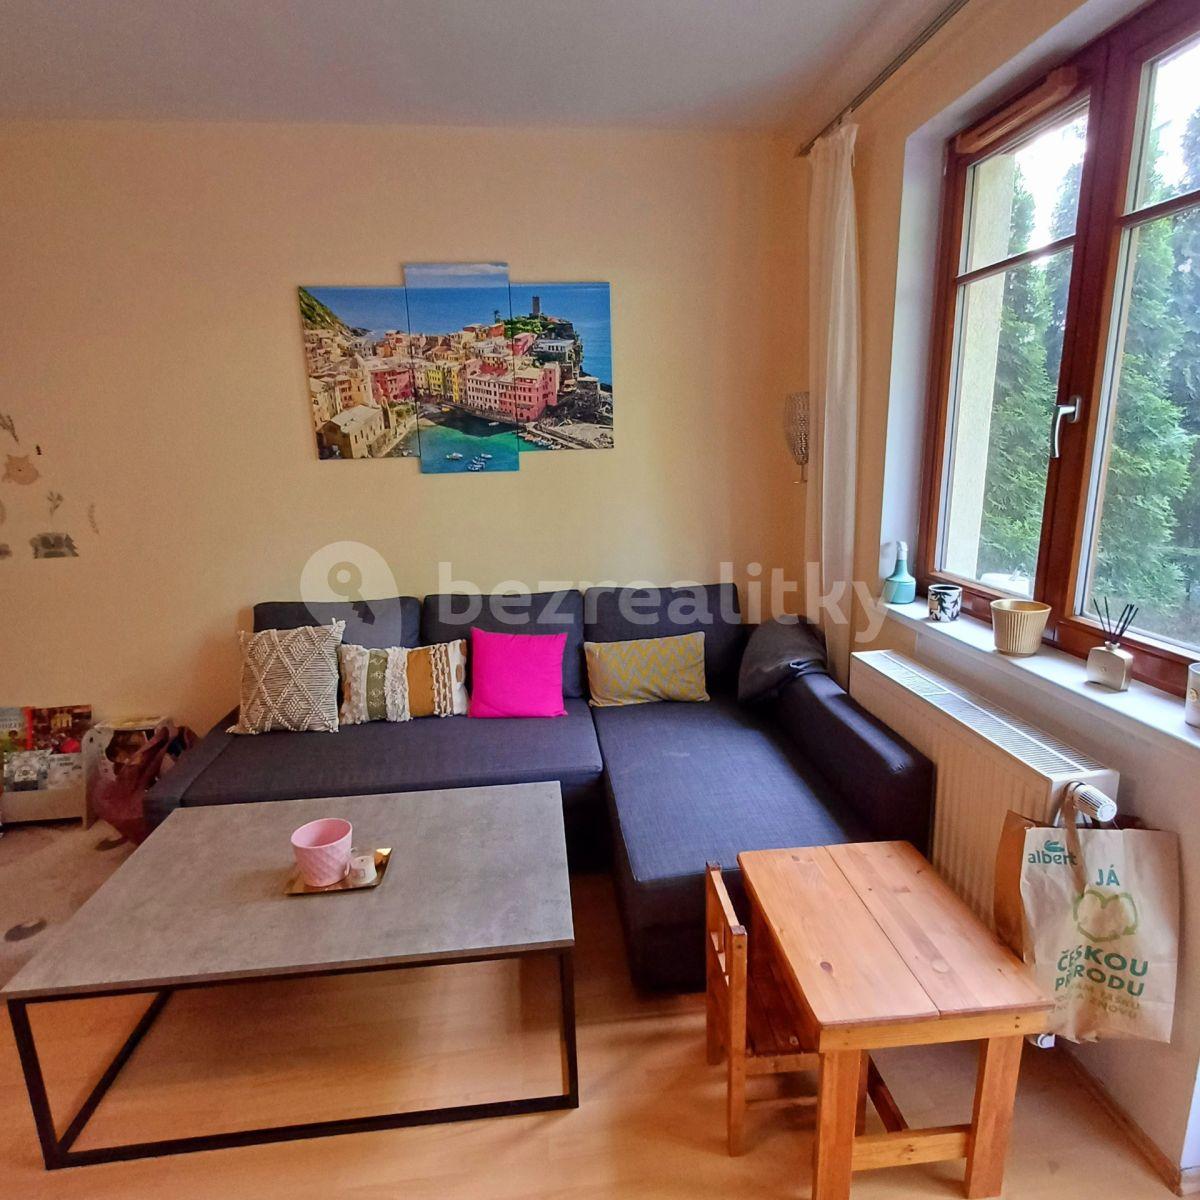 2 bedroom with open-plan kitchen flat for sale, 65 m², Vladycká, Prague, Prague